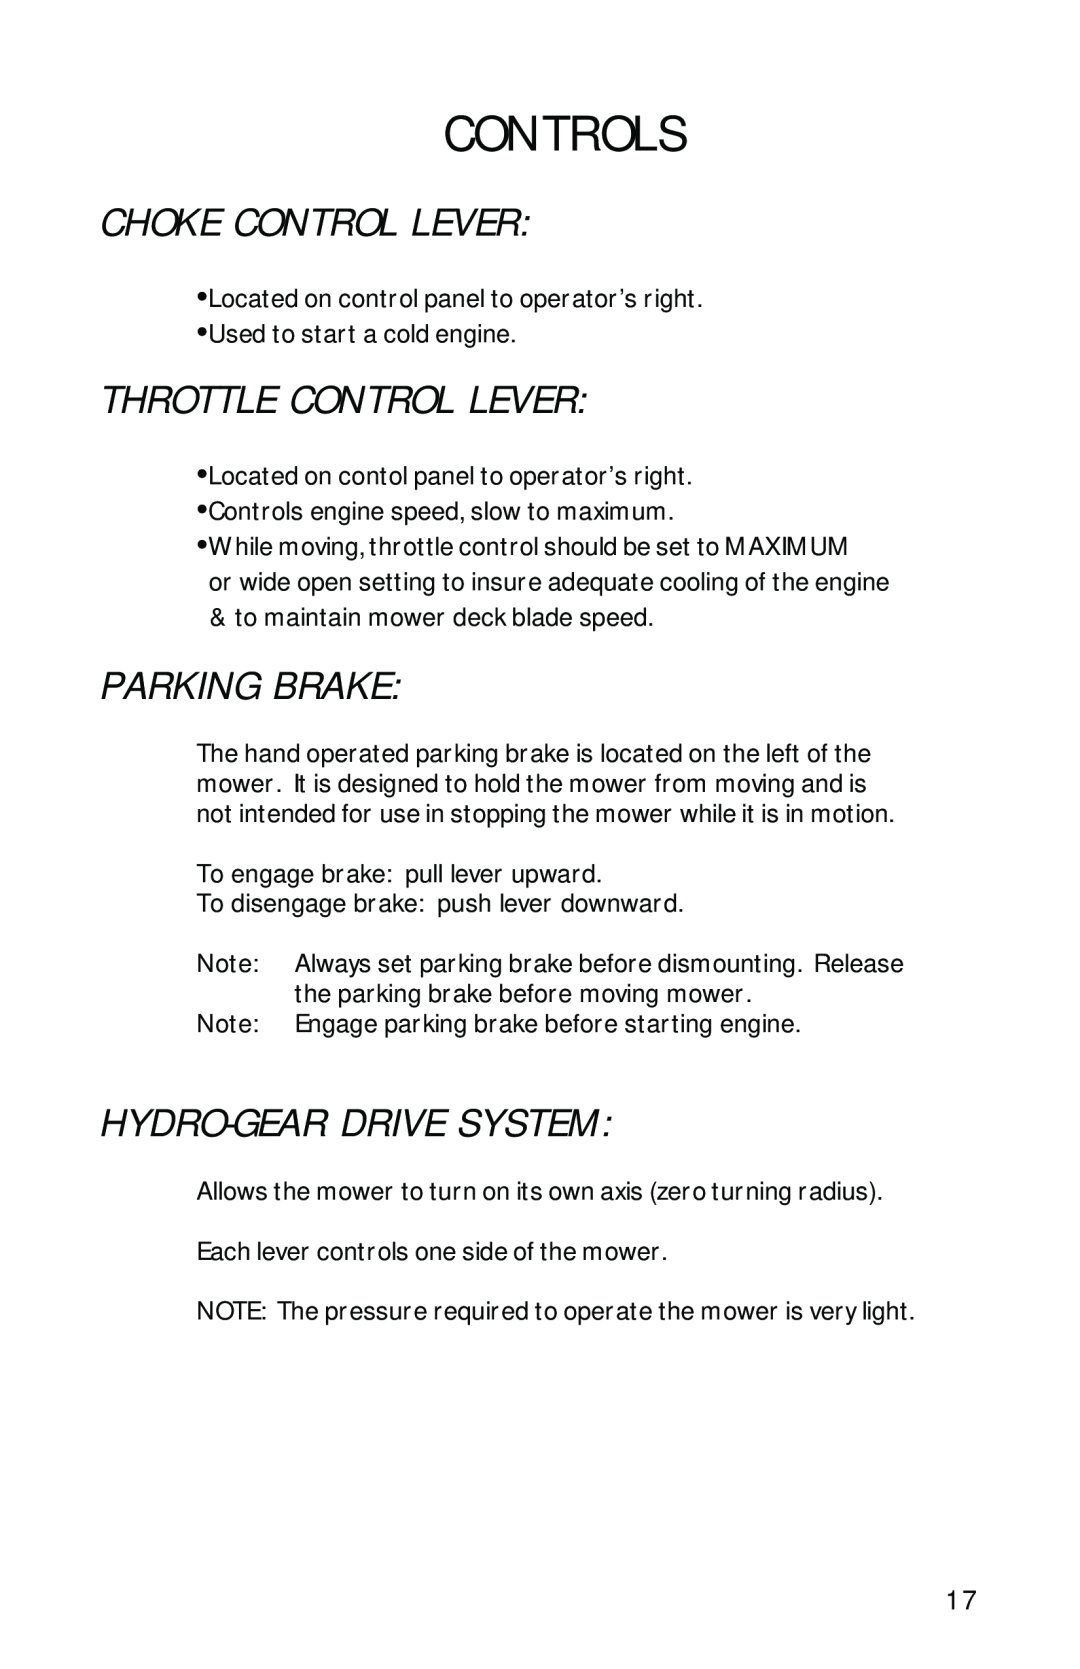 Dixon 7500 Series manual Choke Control Lever, Throttle Control Lever, Parking Brake, Hydro-Gear Drive System, Controls 